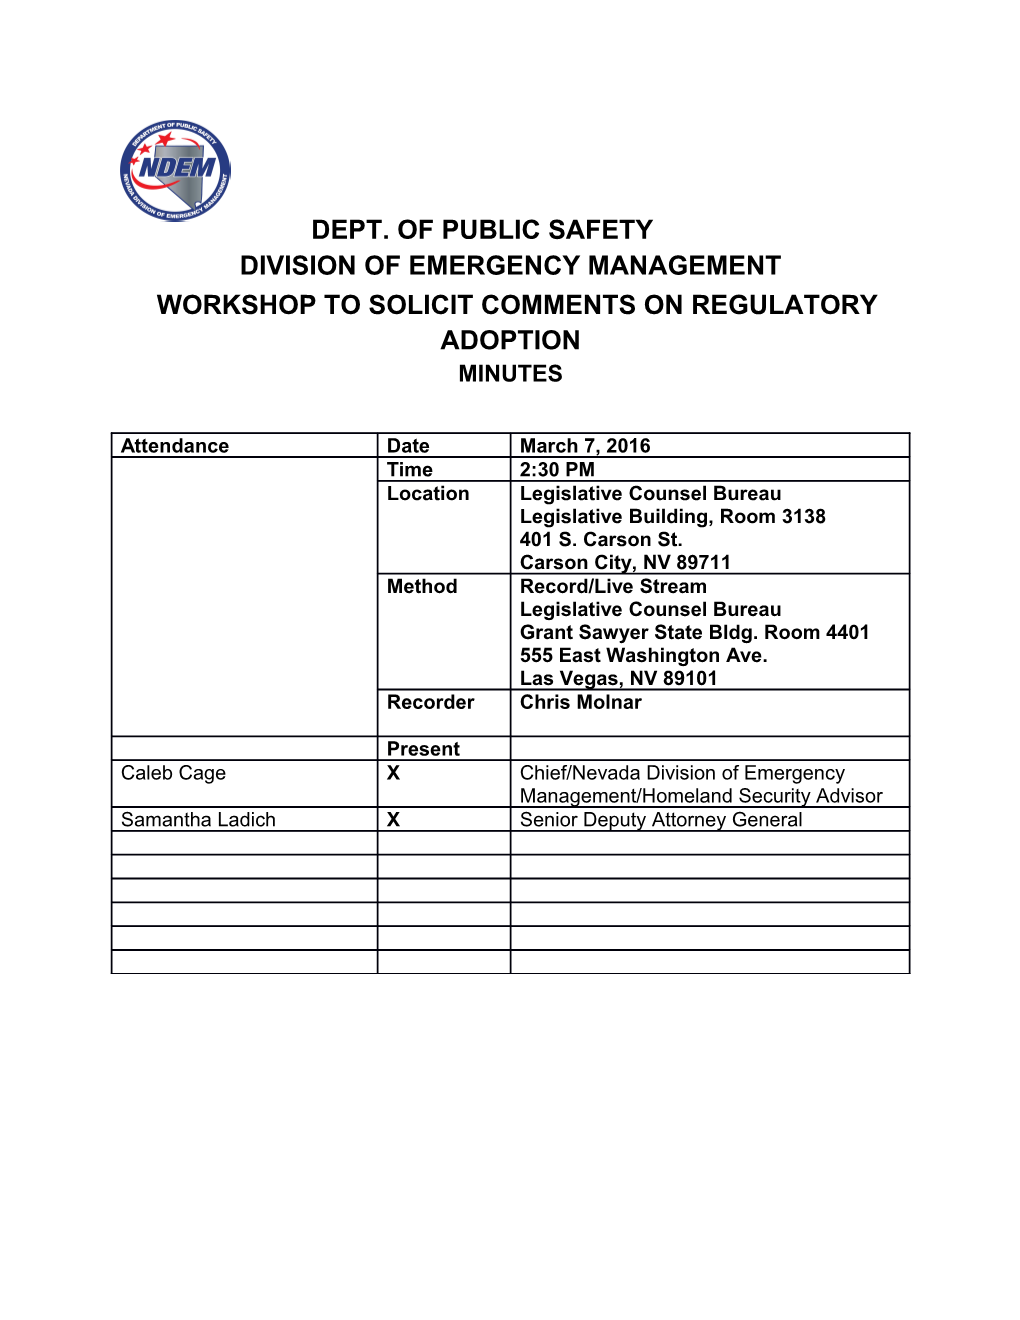 Workshop to Solicit Comments on Regulatory Adoption